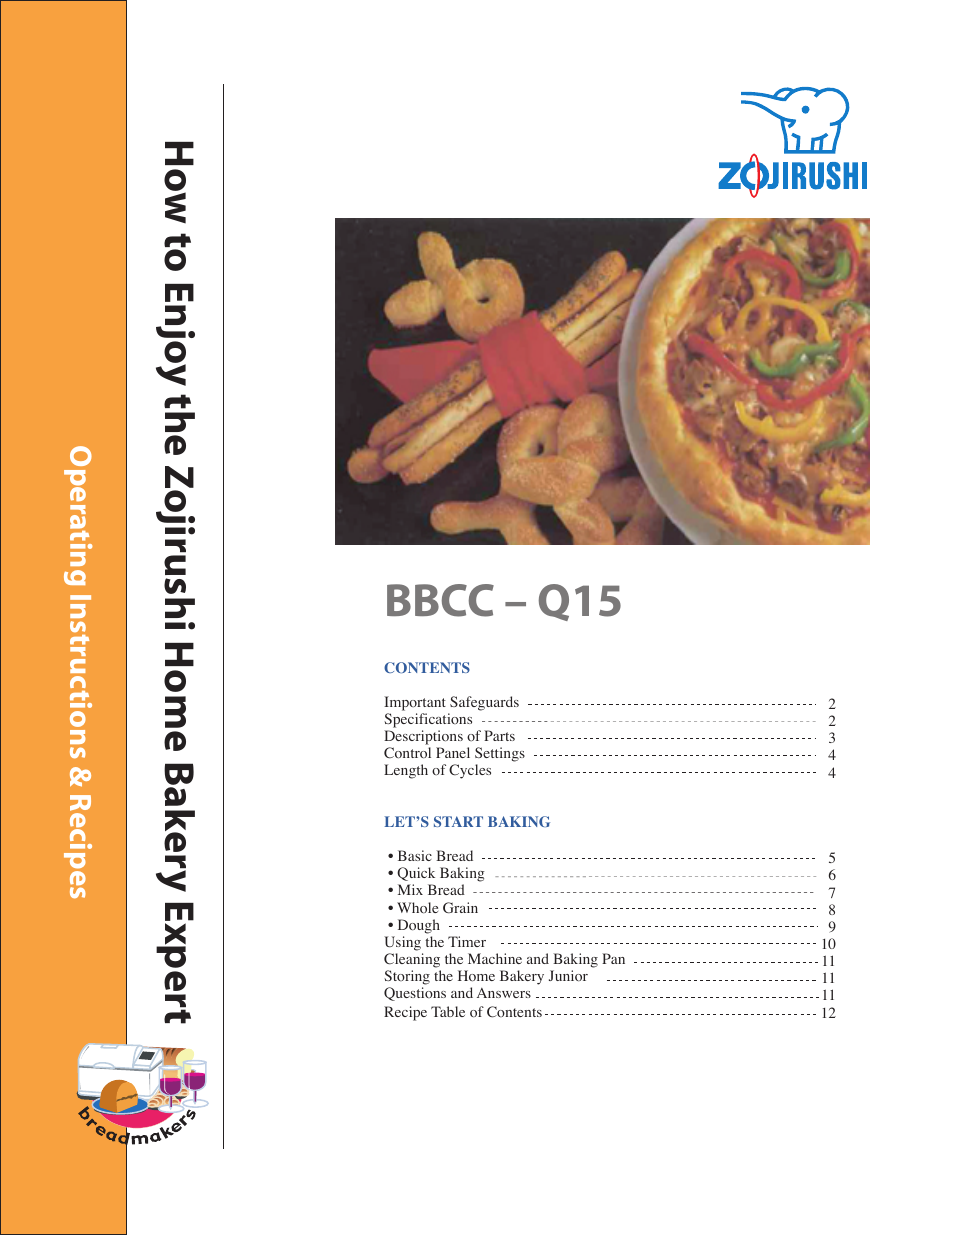 Zojirushi BBCC - Q15 User Manual | 28 pages | Original mode